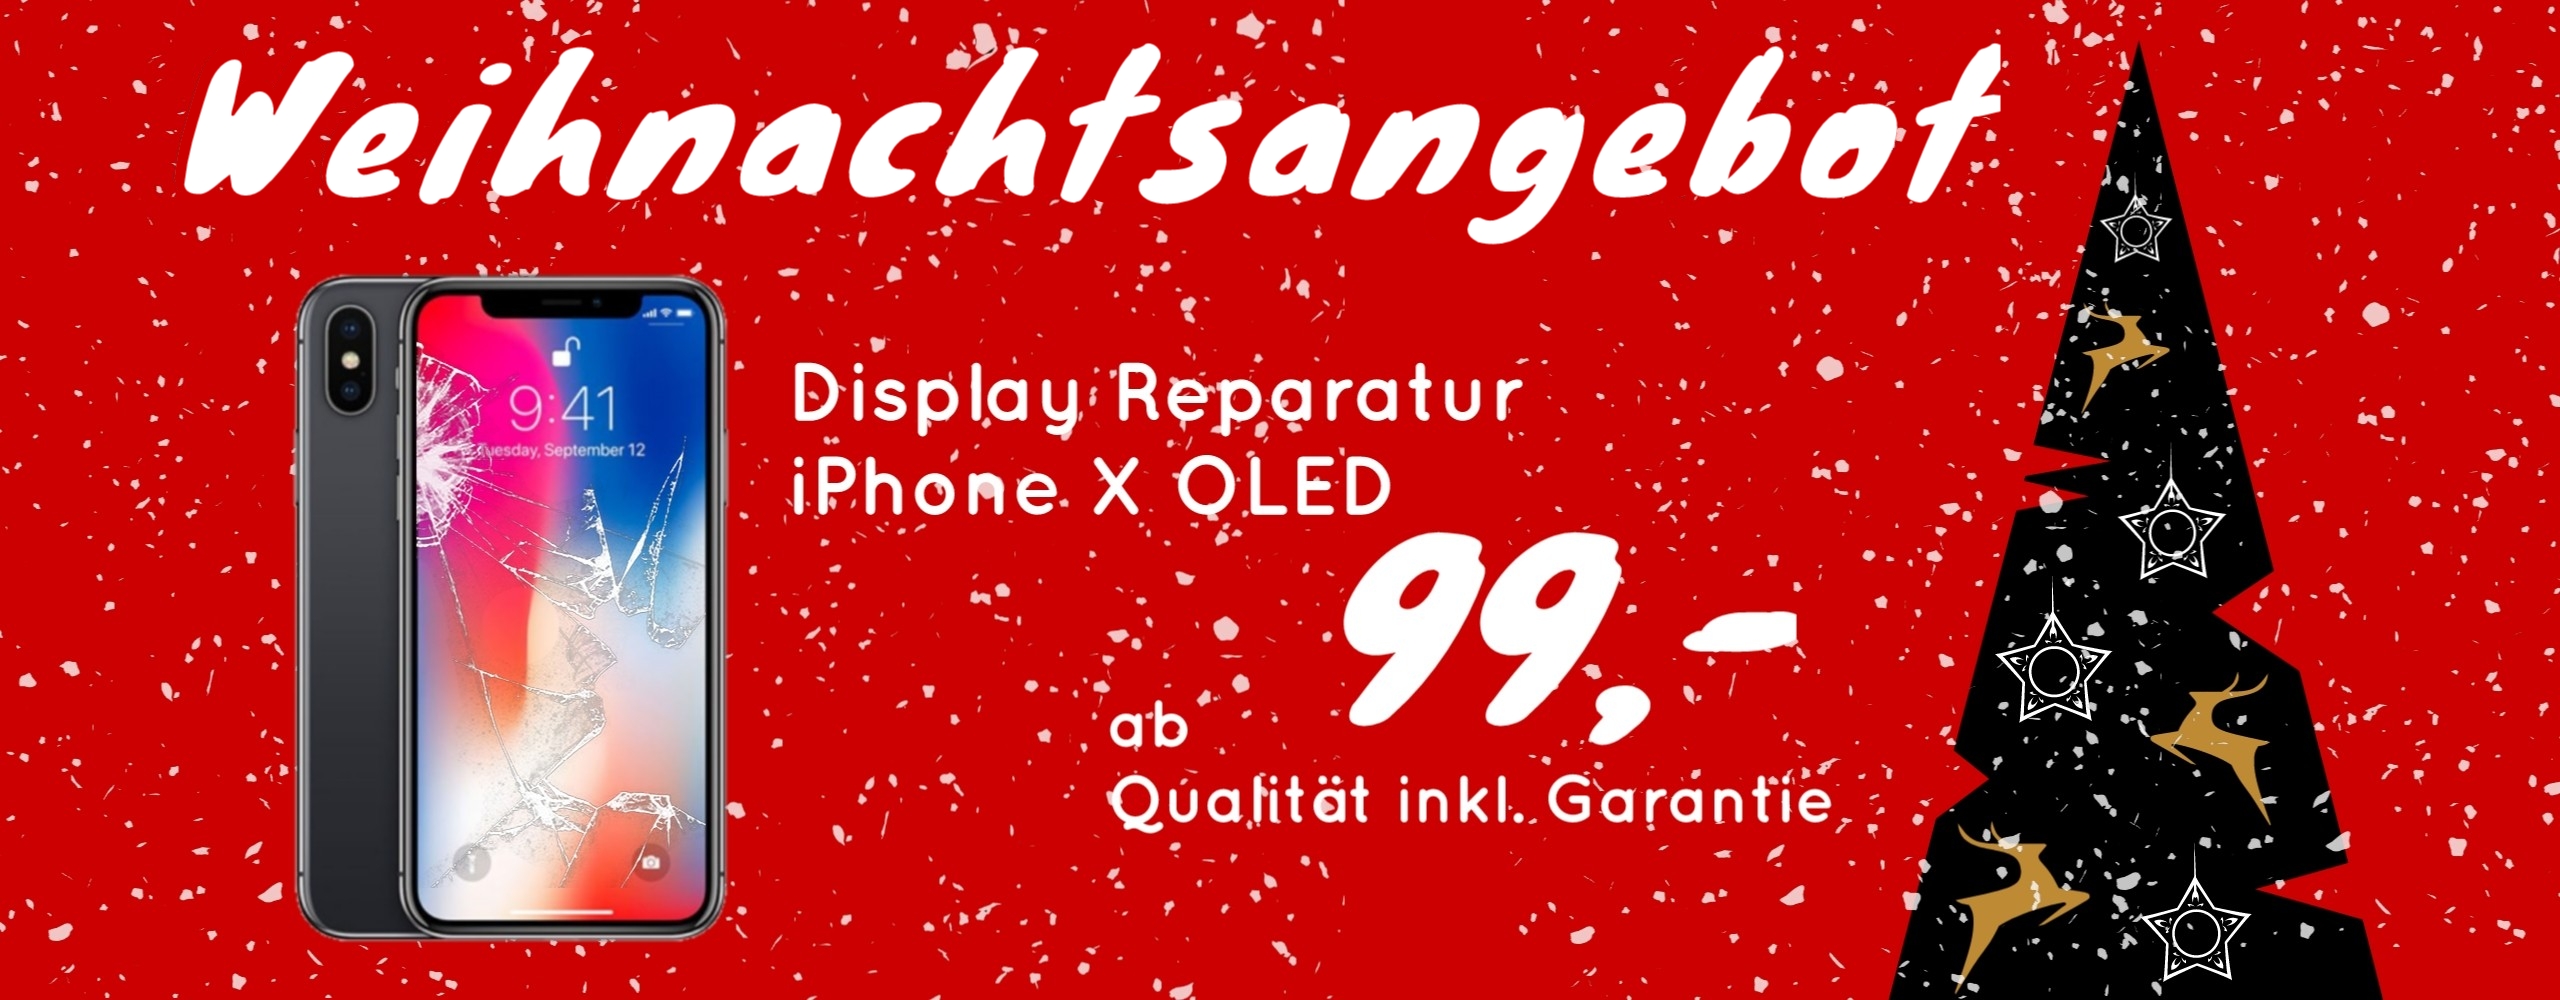 Smartphone Apple iPhone X Display Glas Handy Reparatur OLED 99,- Euro